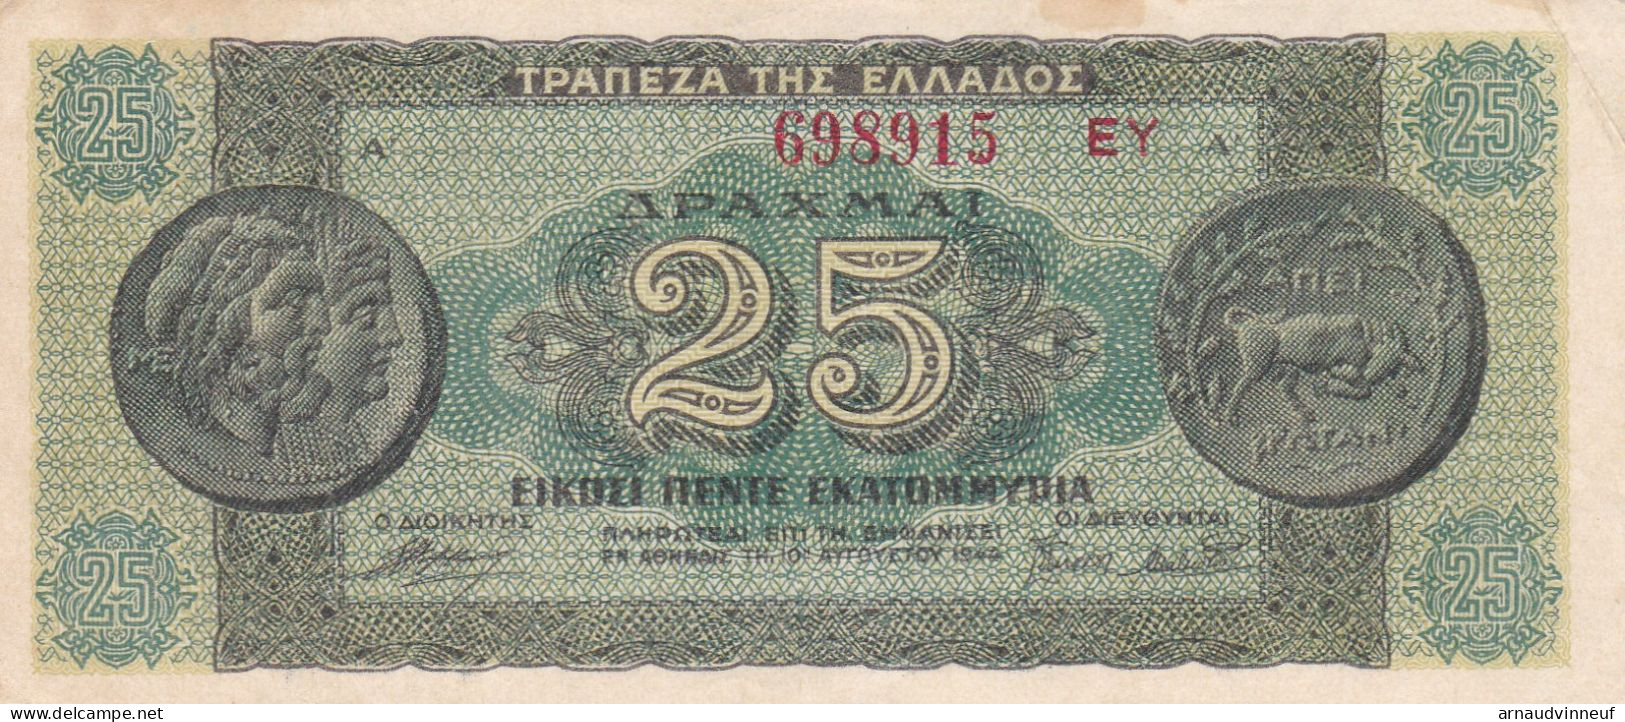 BILLET 25 EKATOMMYPIA - Griechenland